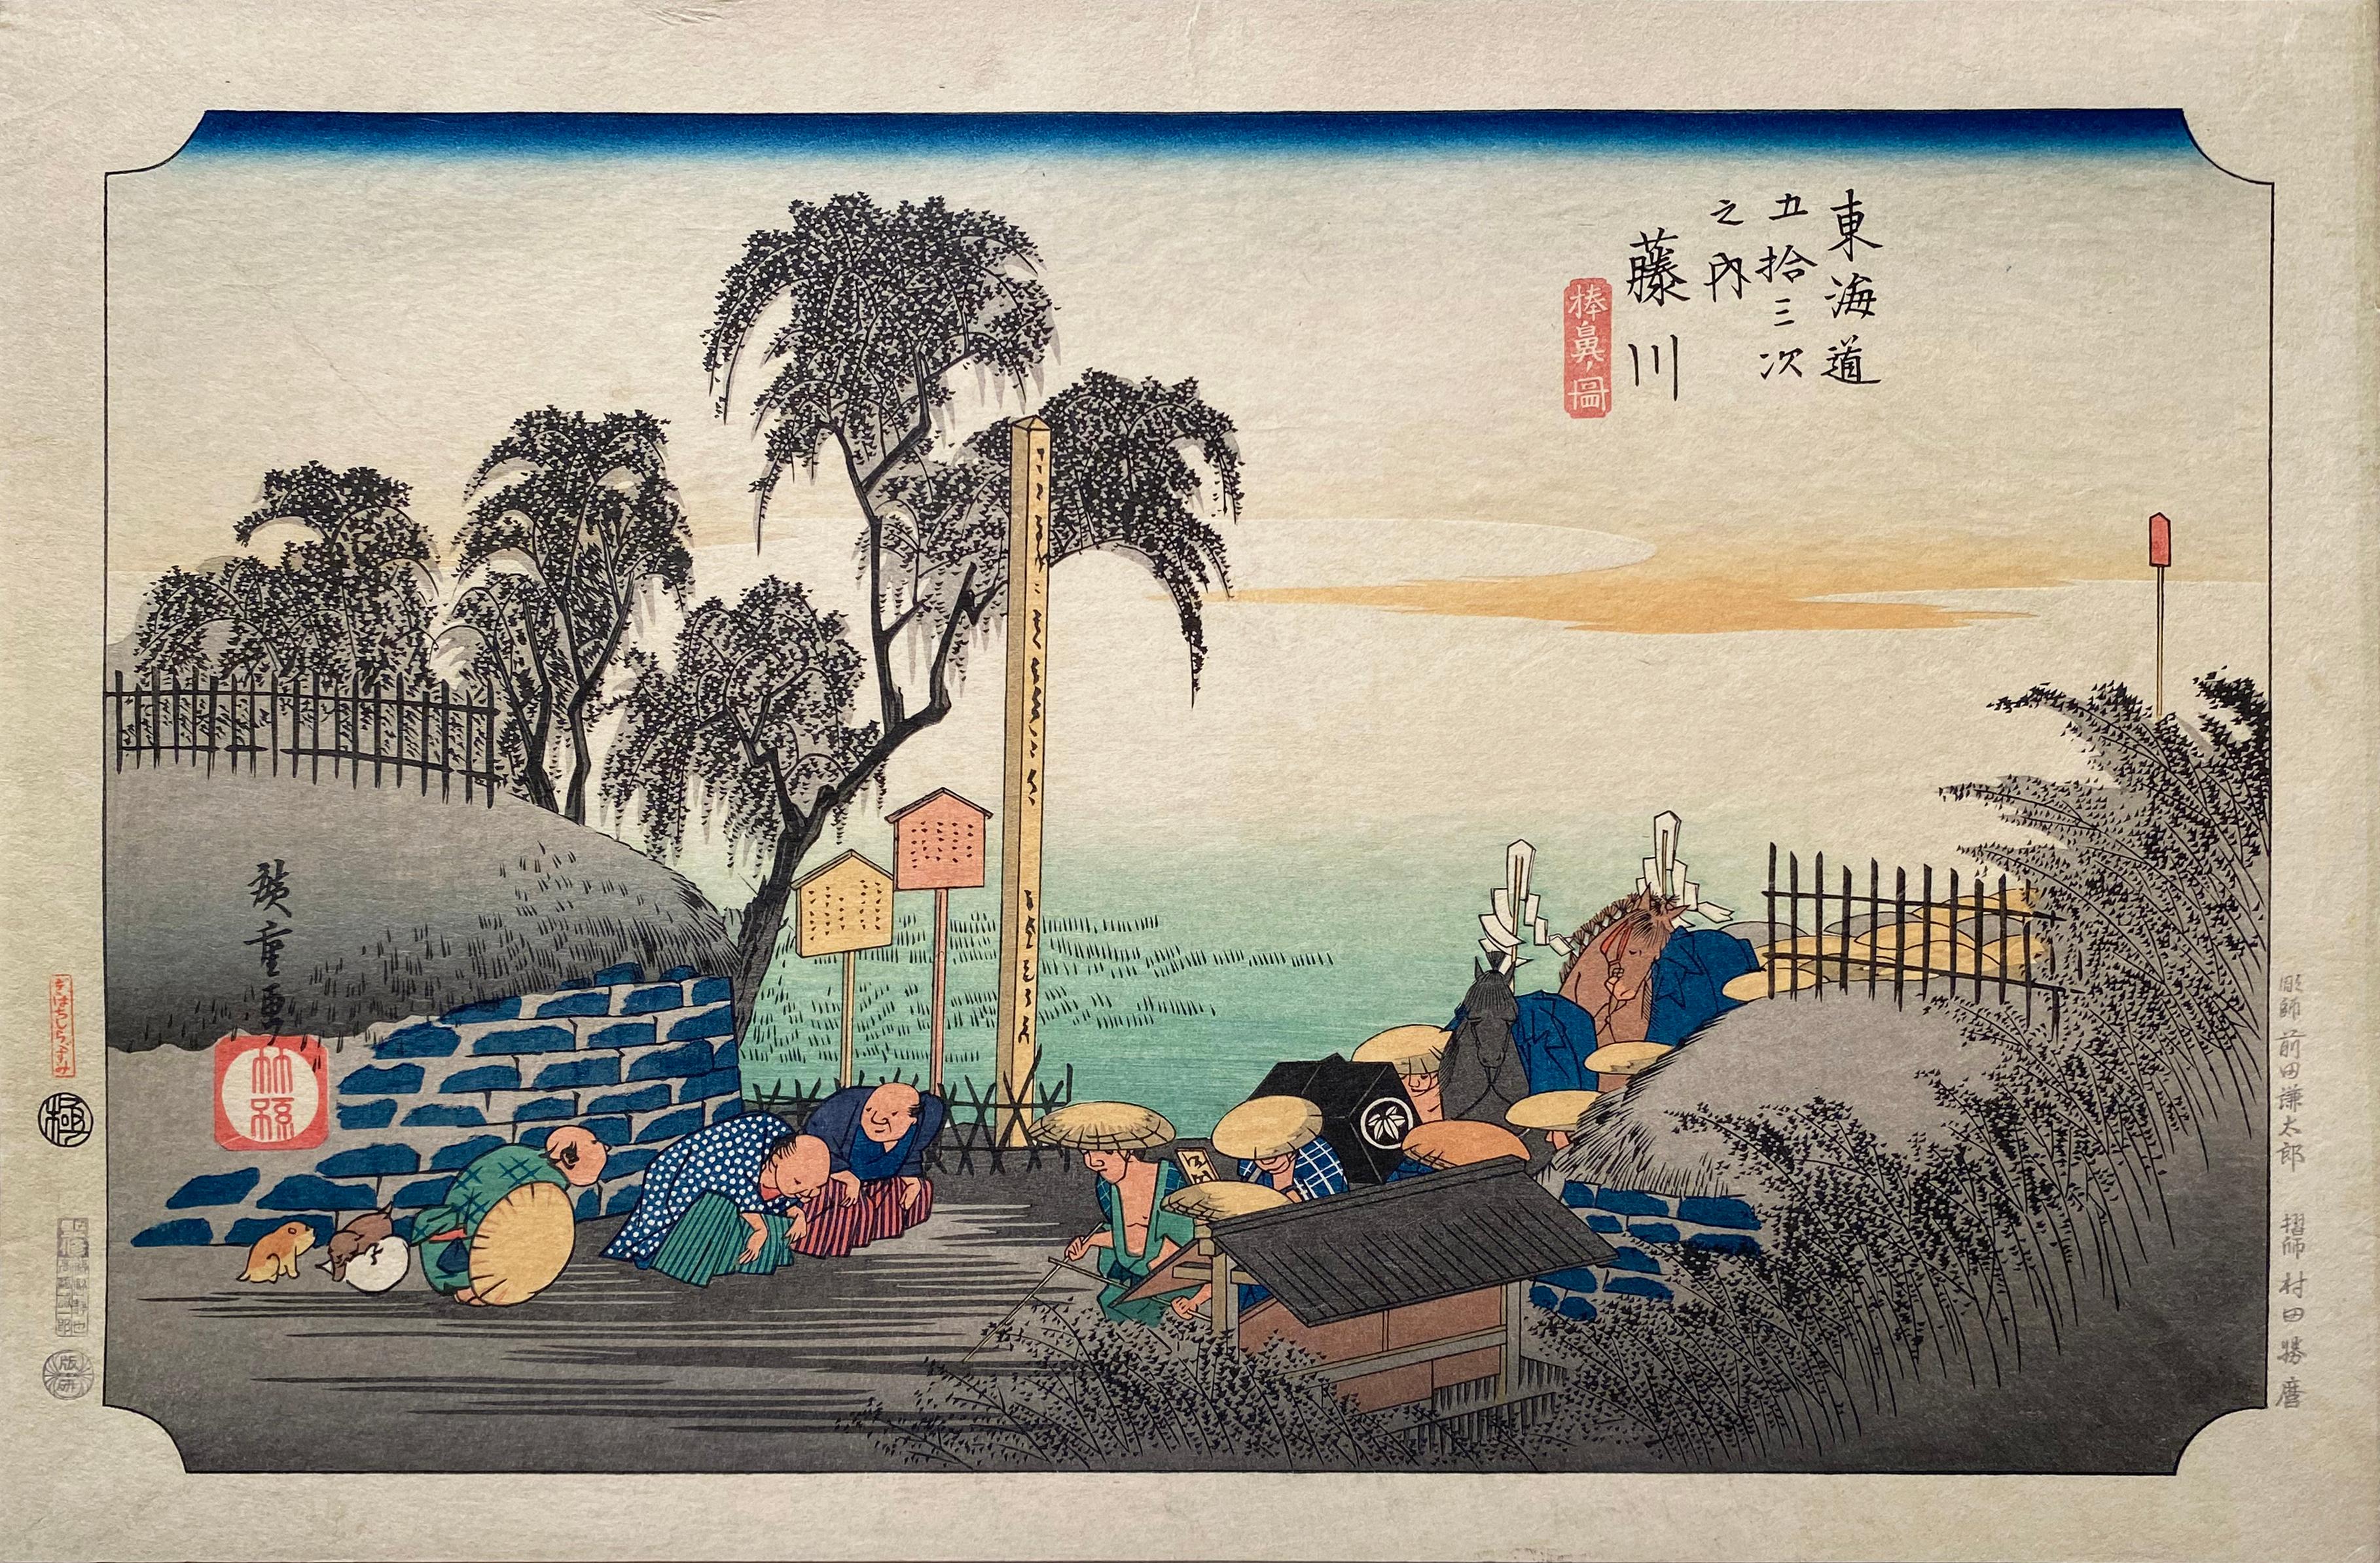 Utagawa Hiroshige (Ando Hiroshige) Landscape Print - 'View of Fujikawa',  After Utagawa Hiroshige 歌川廣重, Ukiyo-e Woodblock, Tokaido